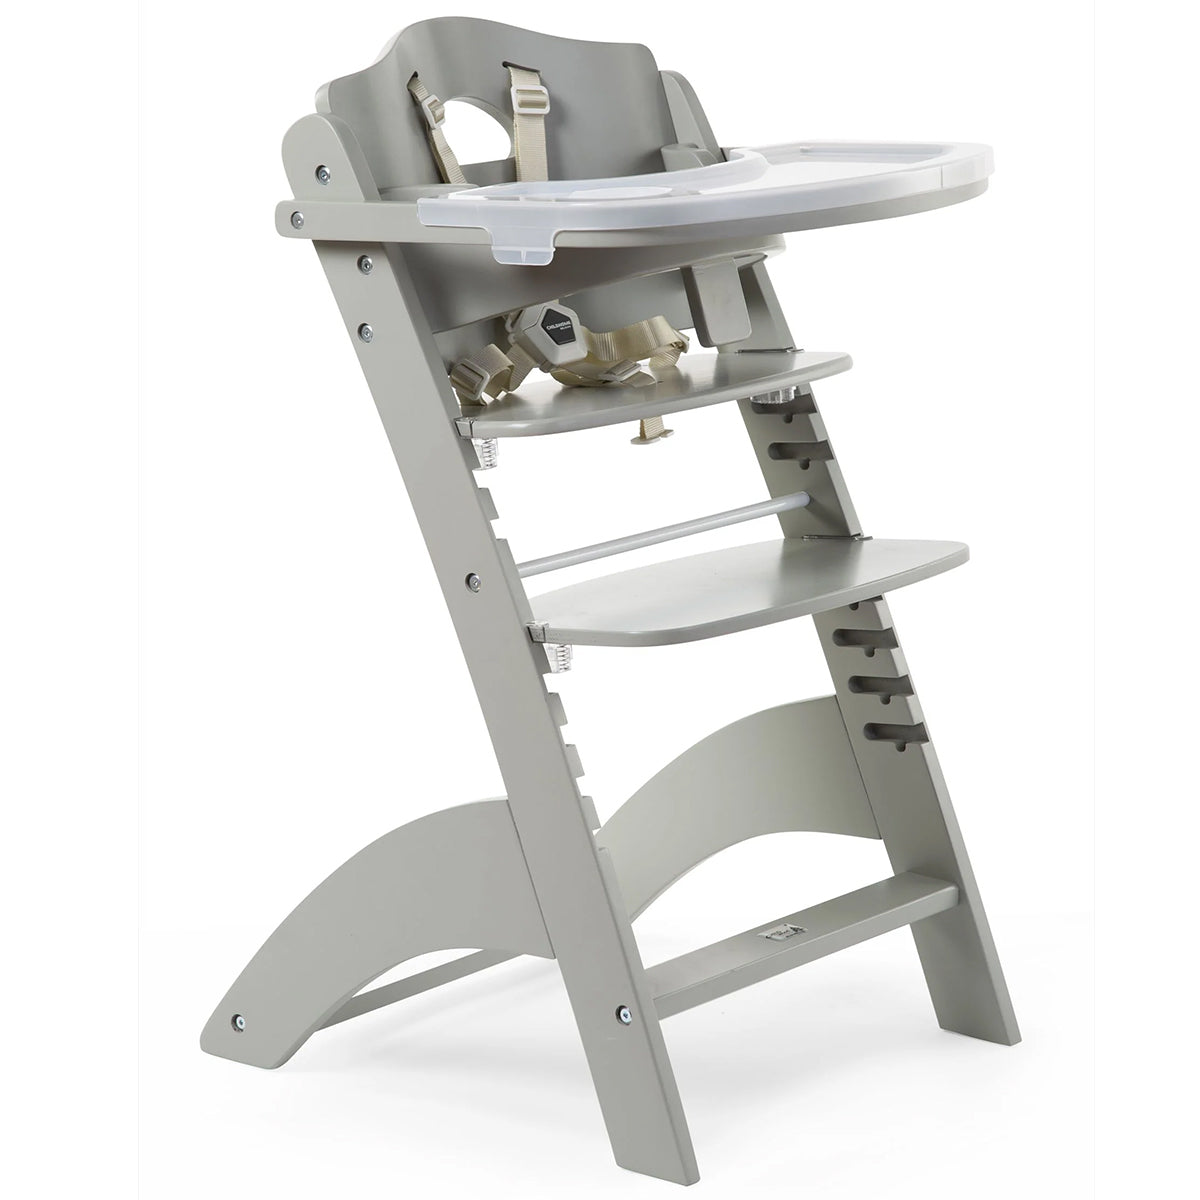 Childhome Baby Grow Chair Lambda 3 (Stone Grey)